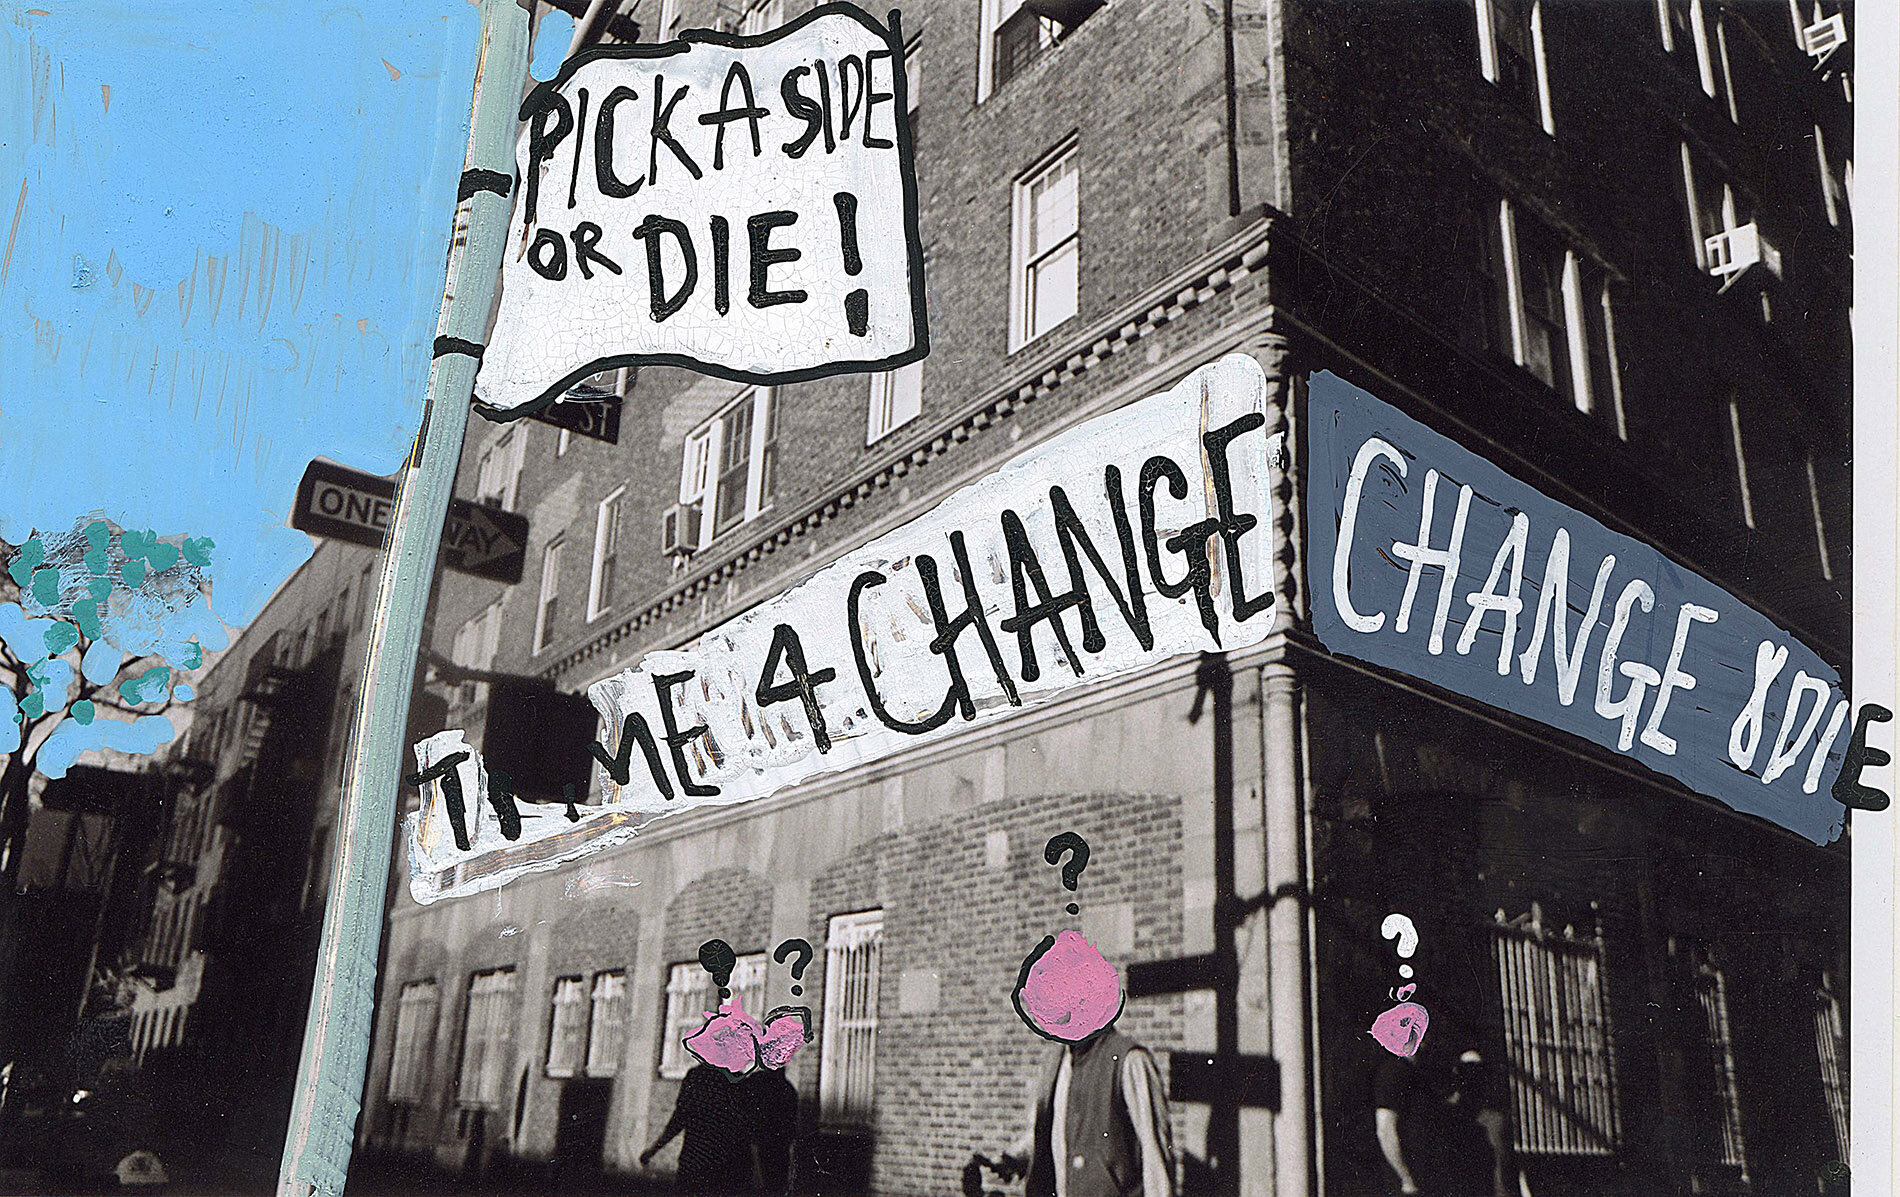  ‘Change or Die’ 2015, Berlin, Inkjet photograph &amp; Acrylic, 10x15cm 